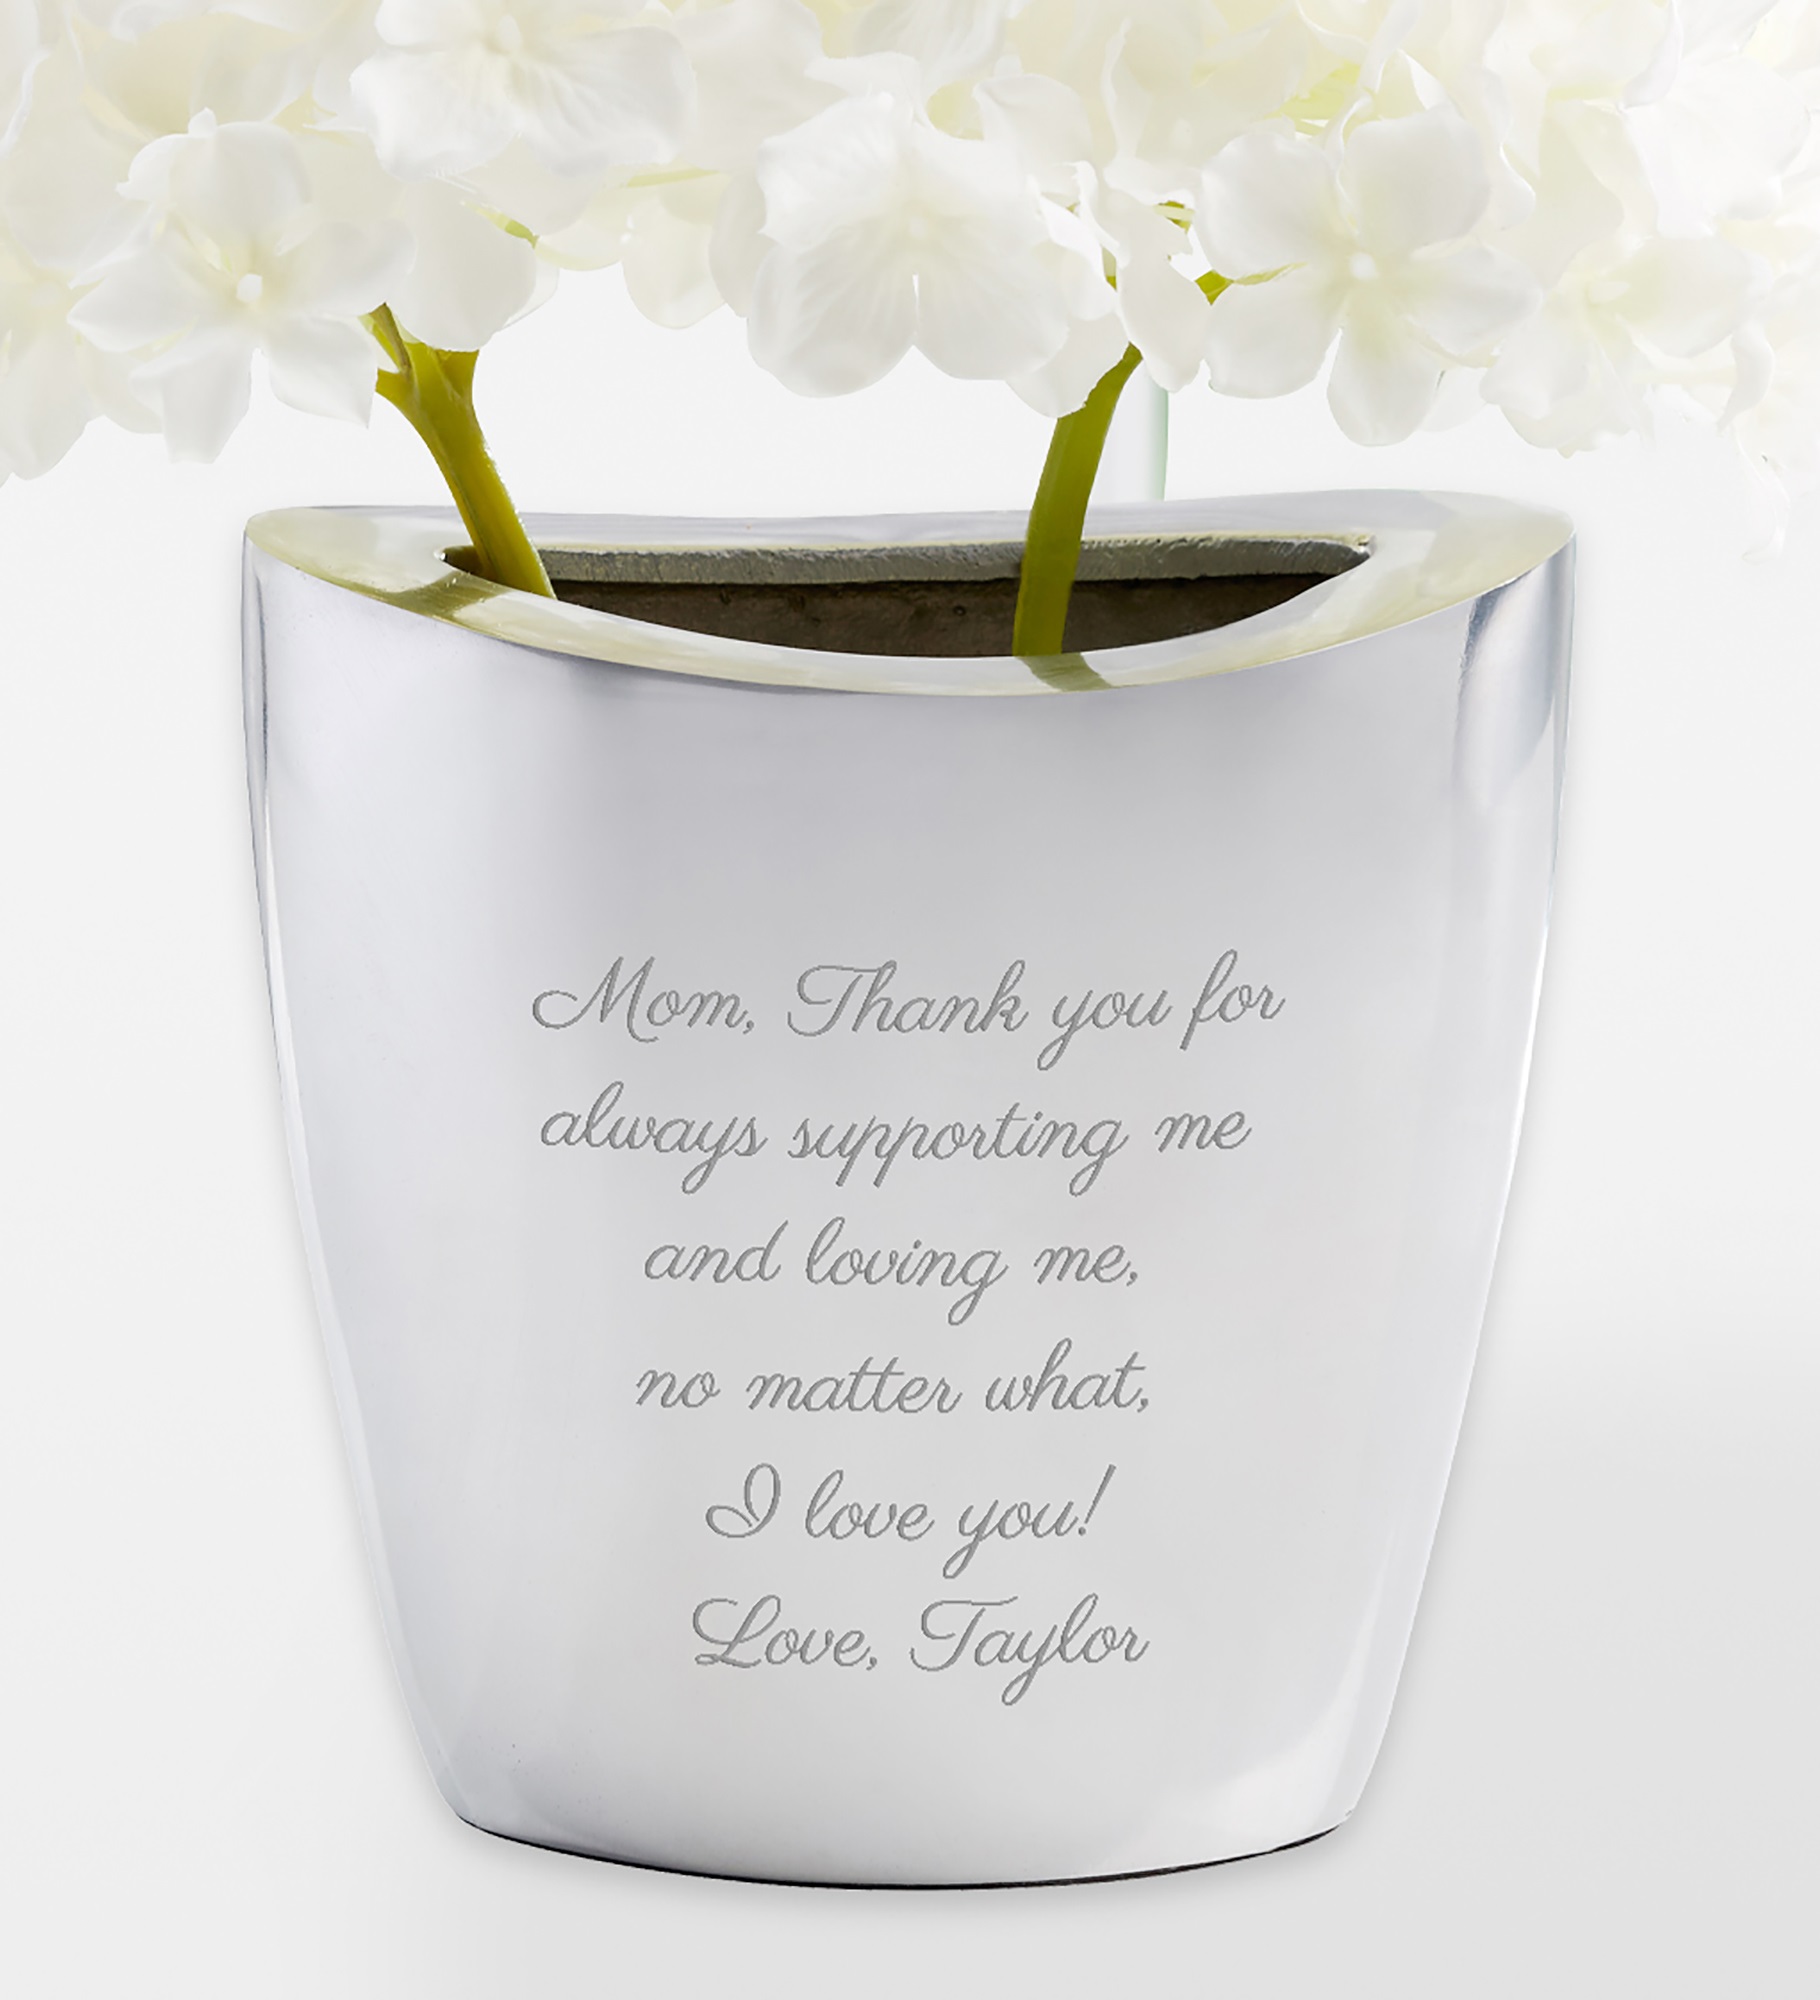  Engraved Message Aluminum Vase for Her